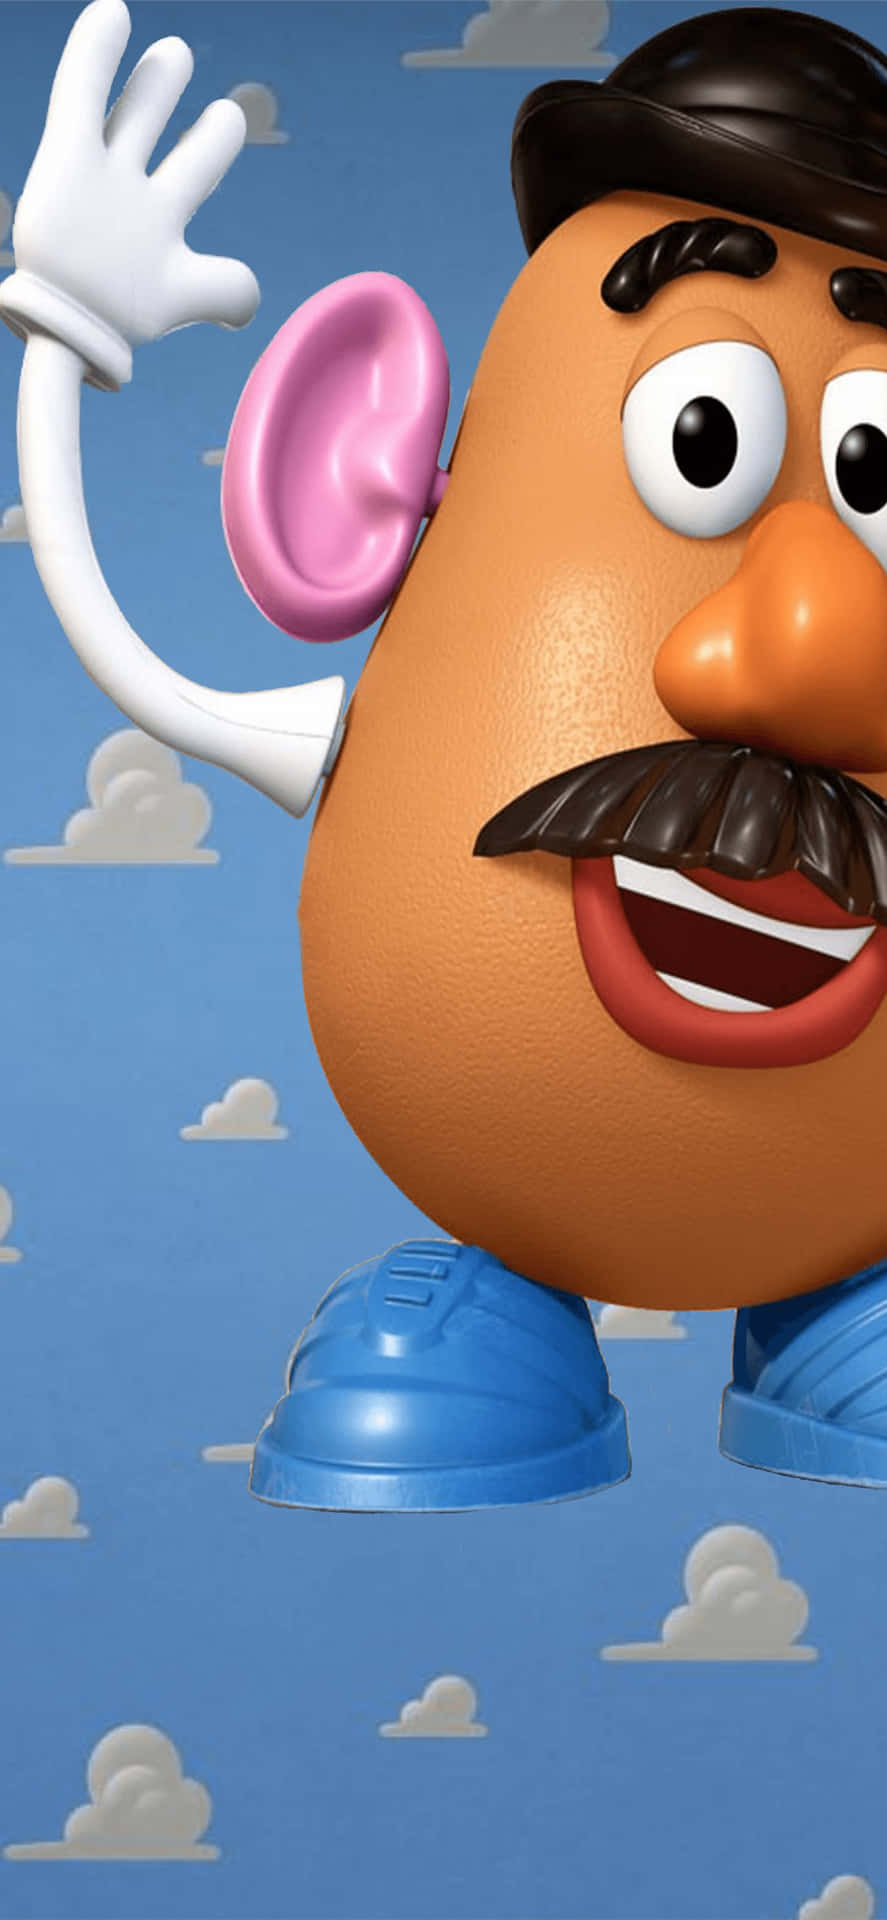 Mr. Potato Head Background